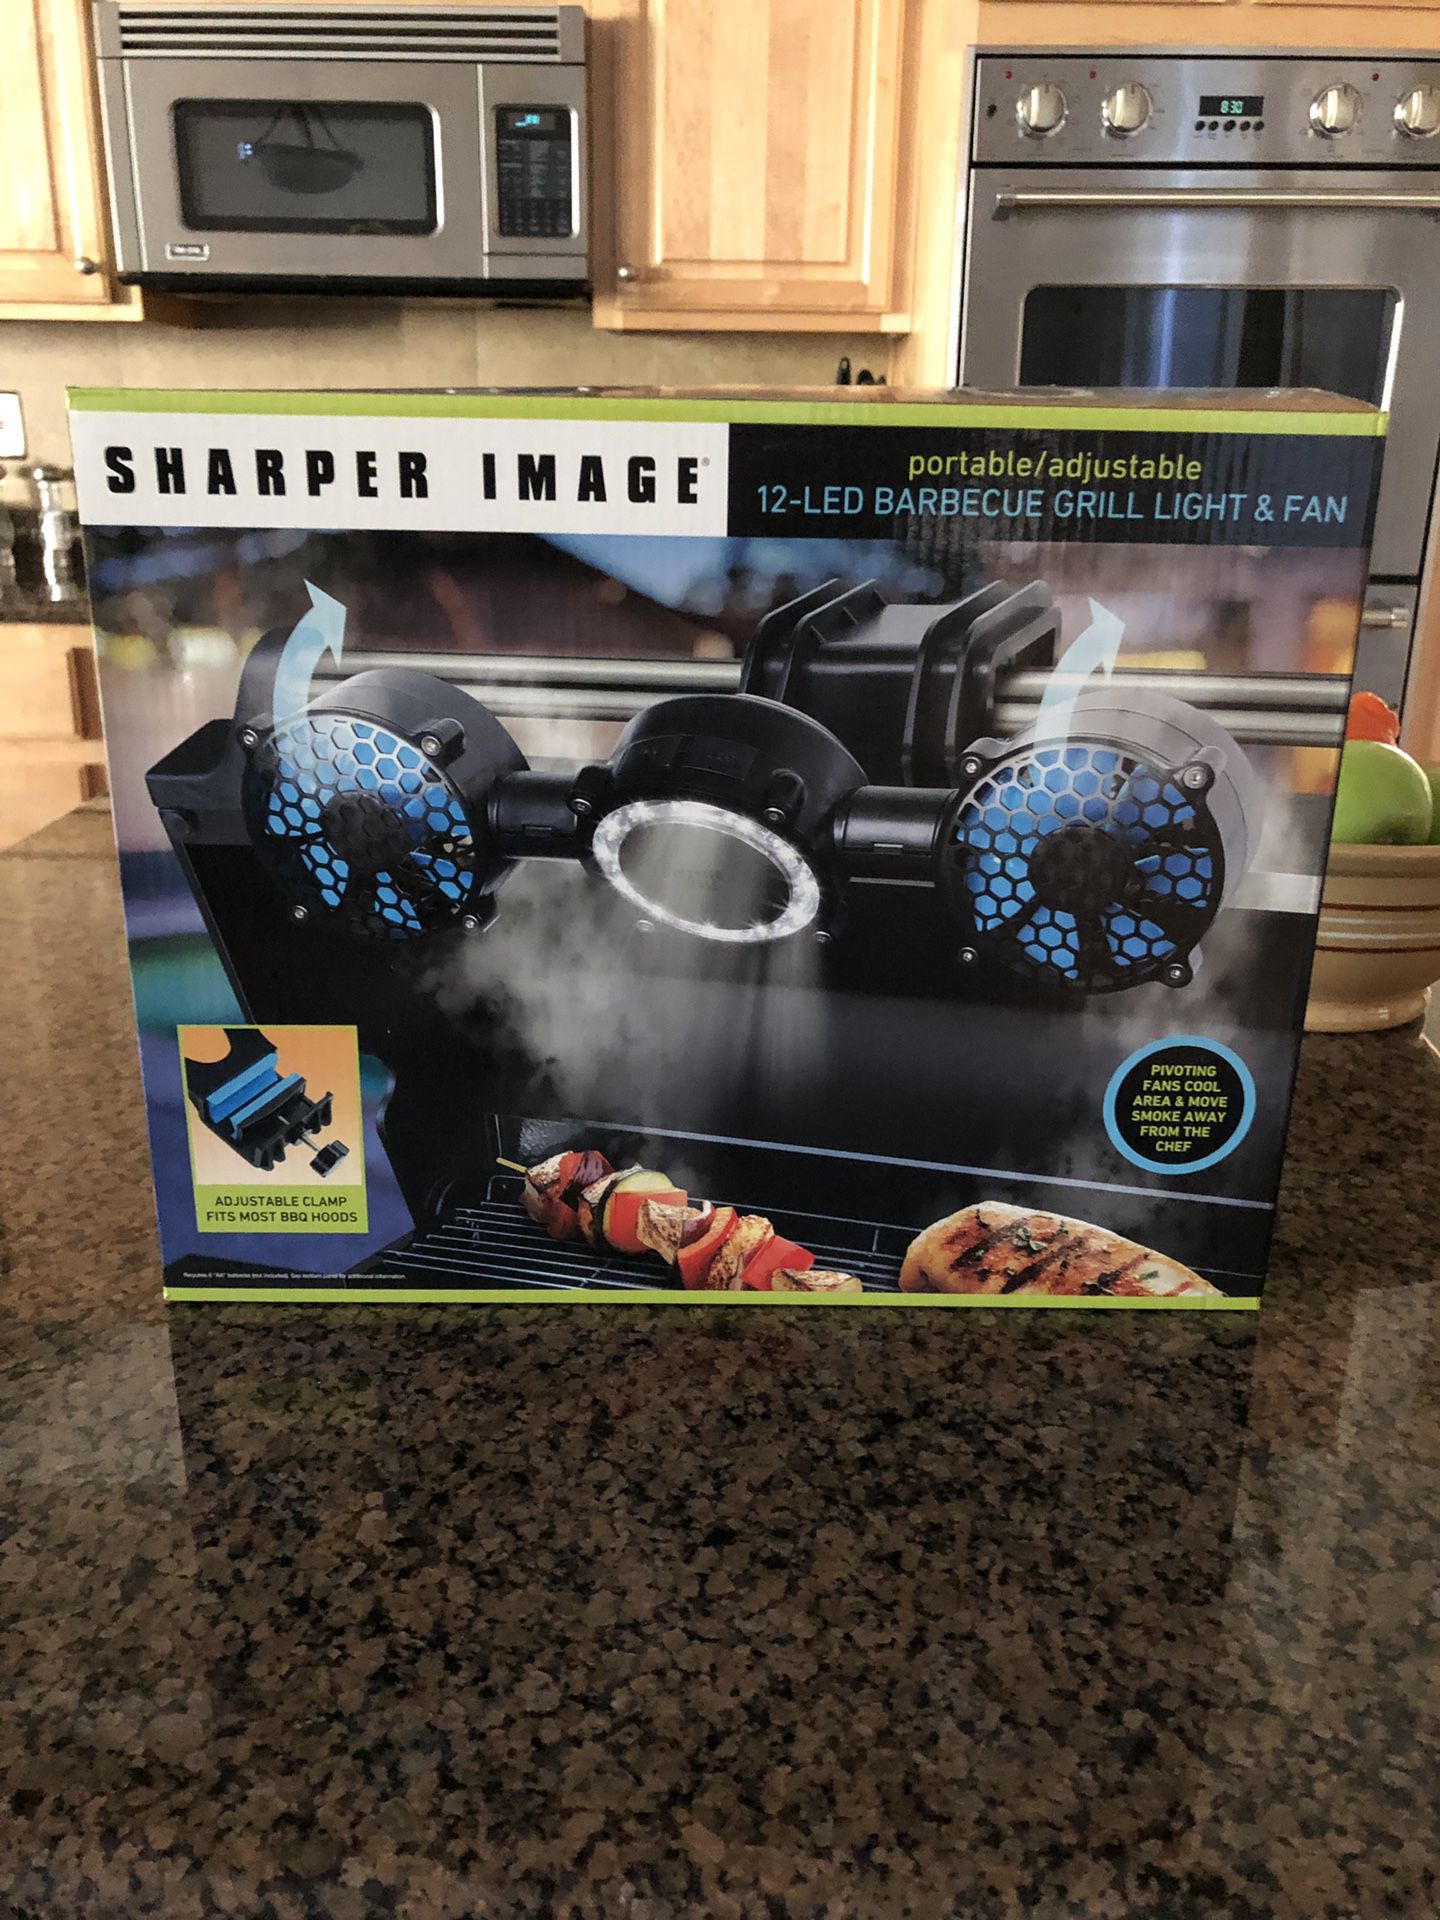 Sharper Image portable / adjustable 12-LED BBQ Grill Light and Fan